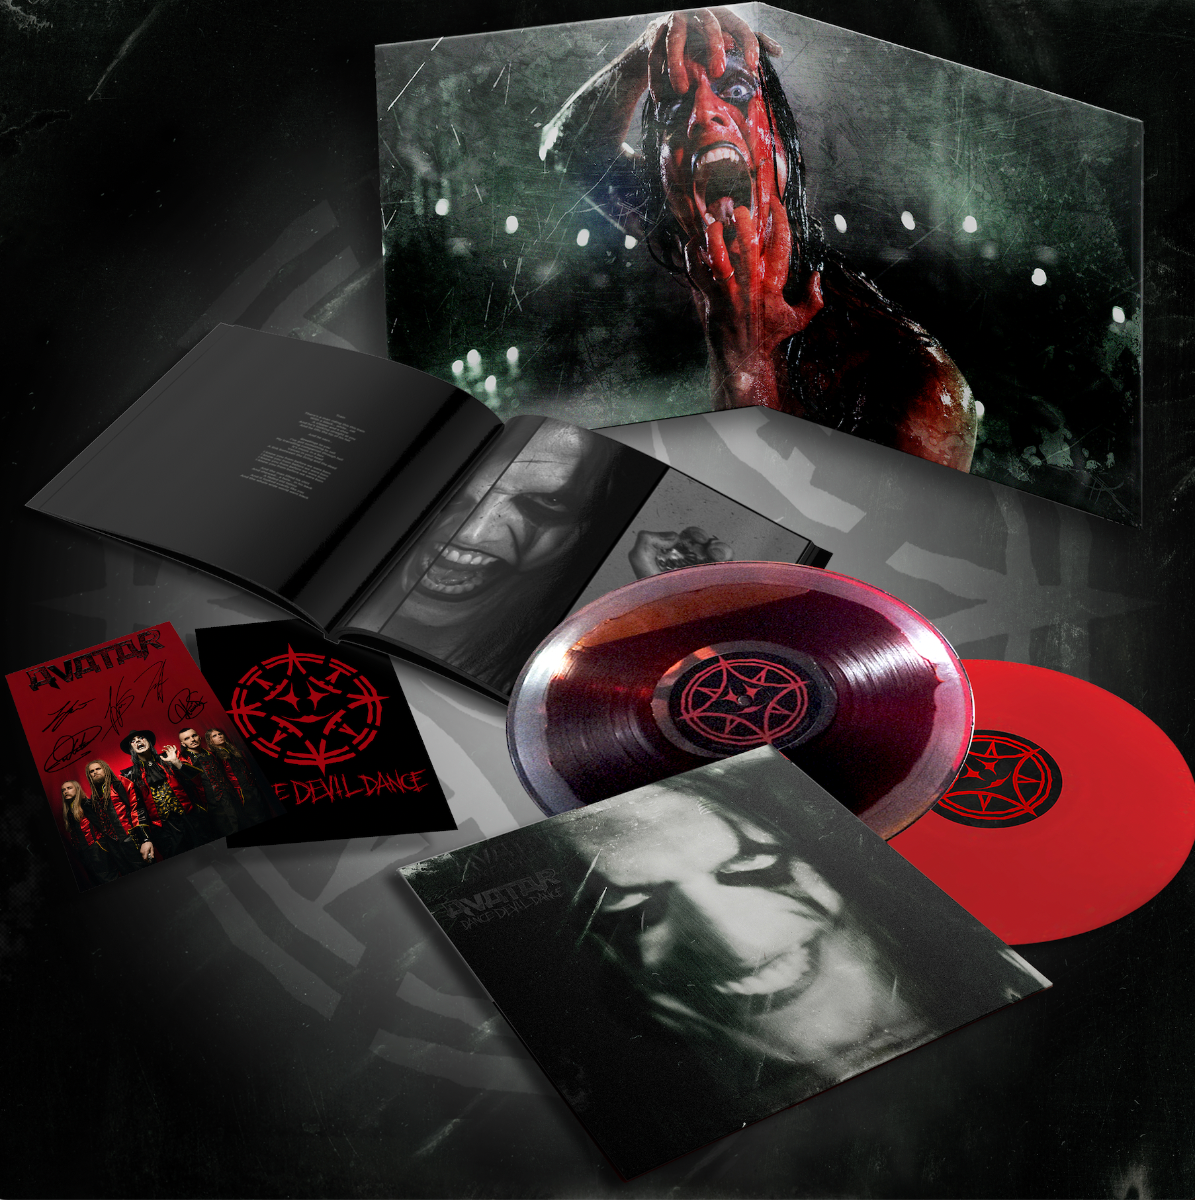 Avatar Release "Afterbirth" Liquid "Blood-Filled" Vinyl Version of "Dance Devil Dance"